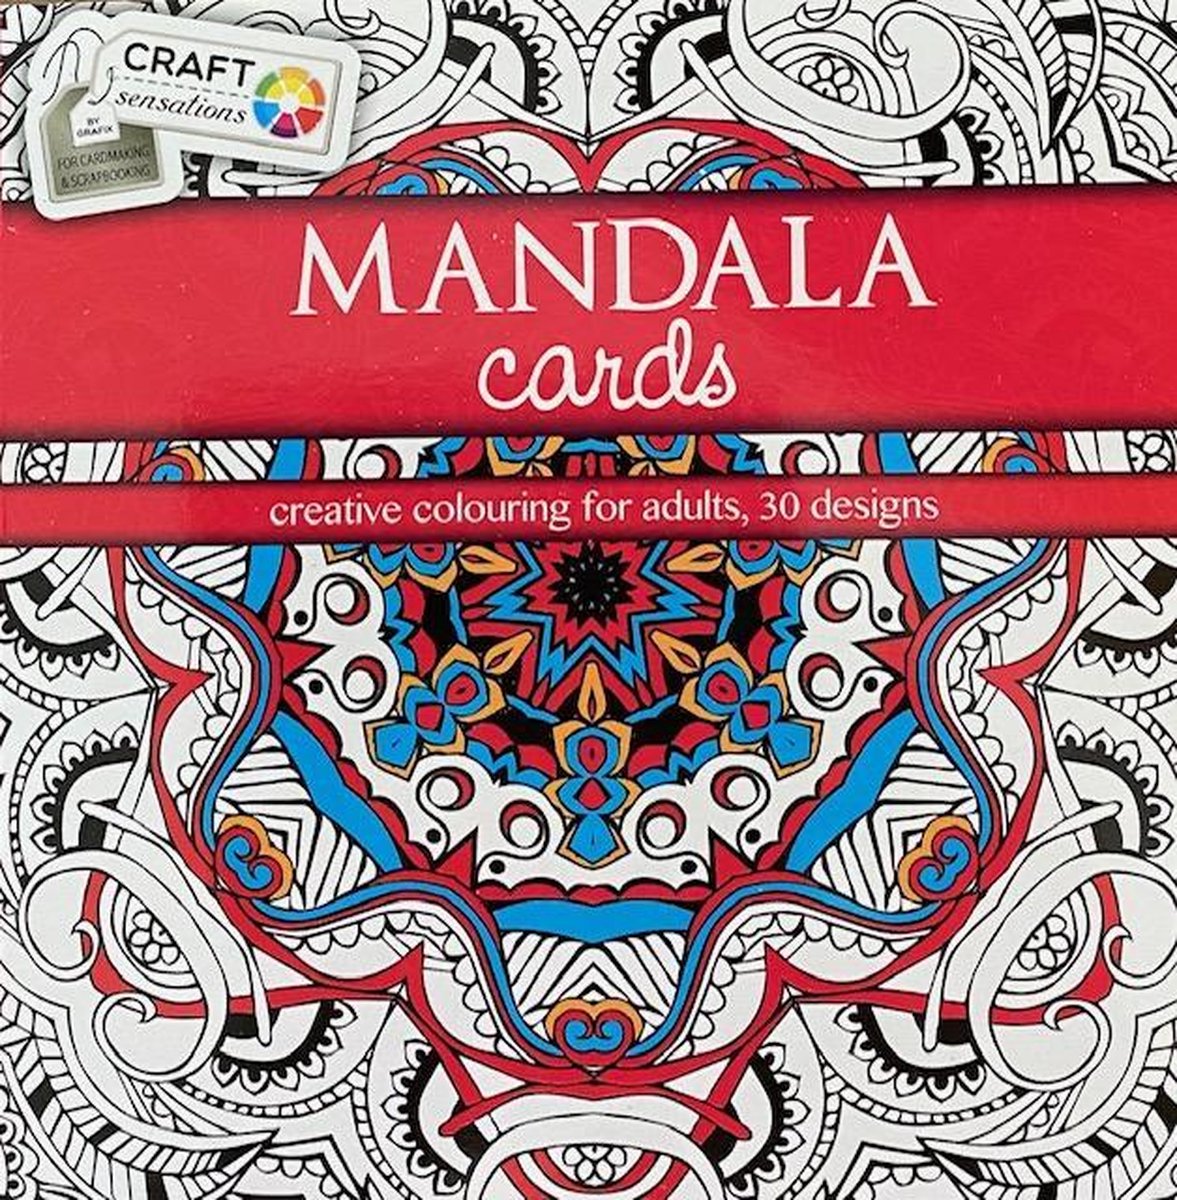 Craft Kleurboek Sensations Mandala Cards Rood